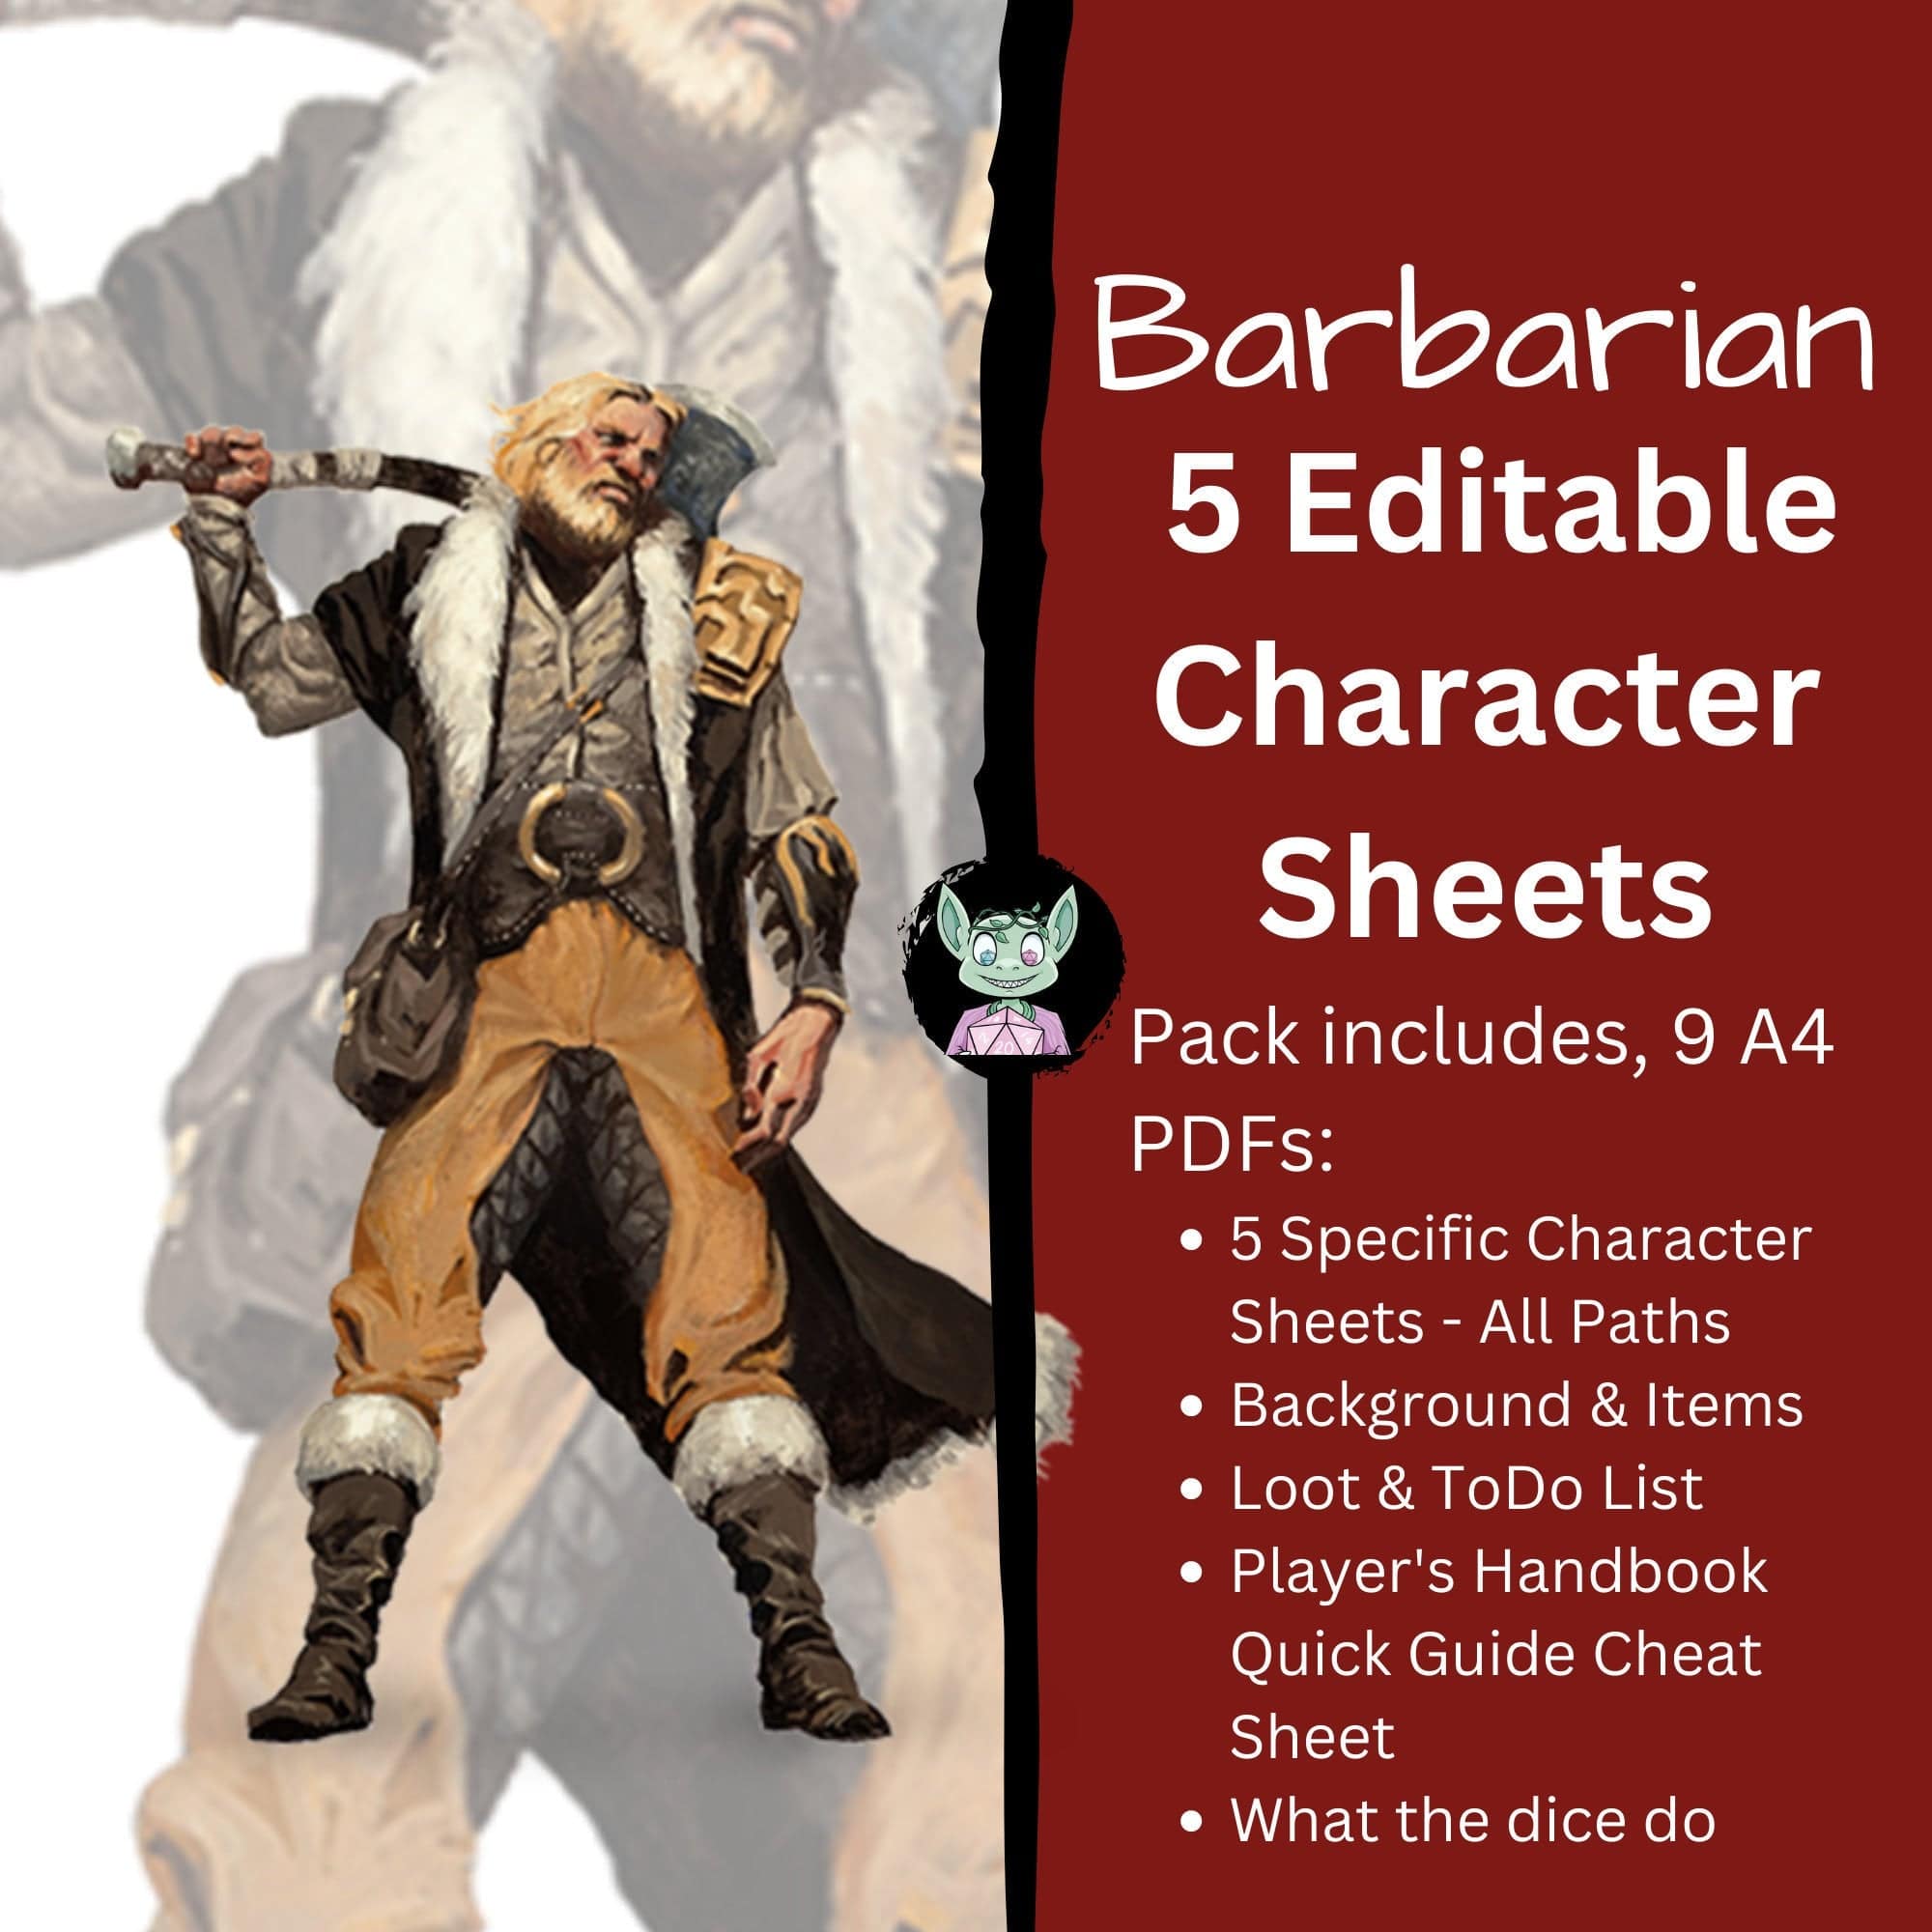 DnD Barbarian Character Sheet - Mystery Dice Goblin